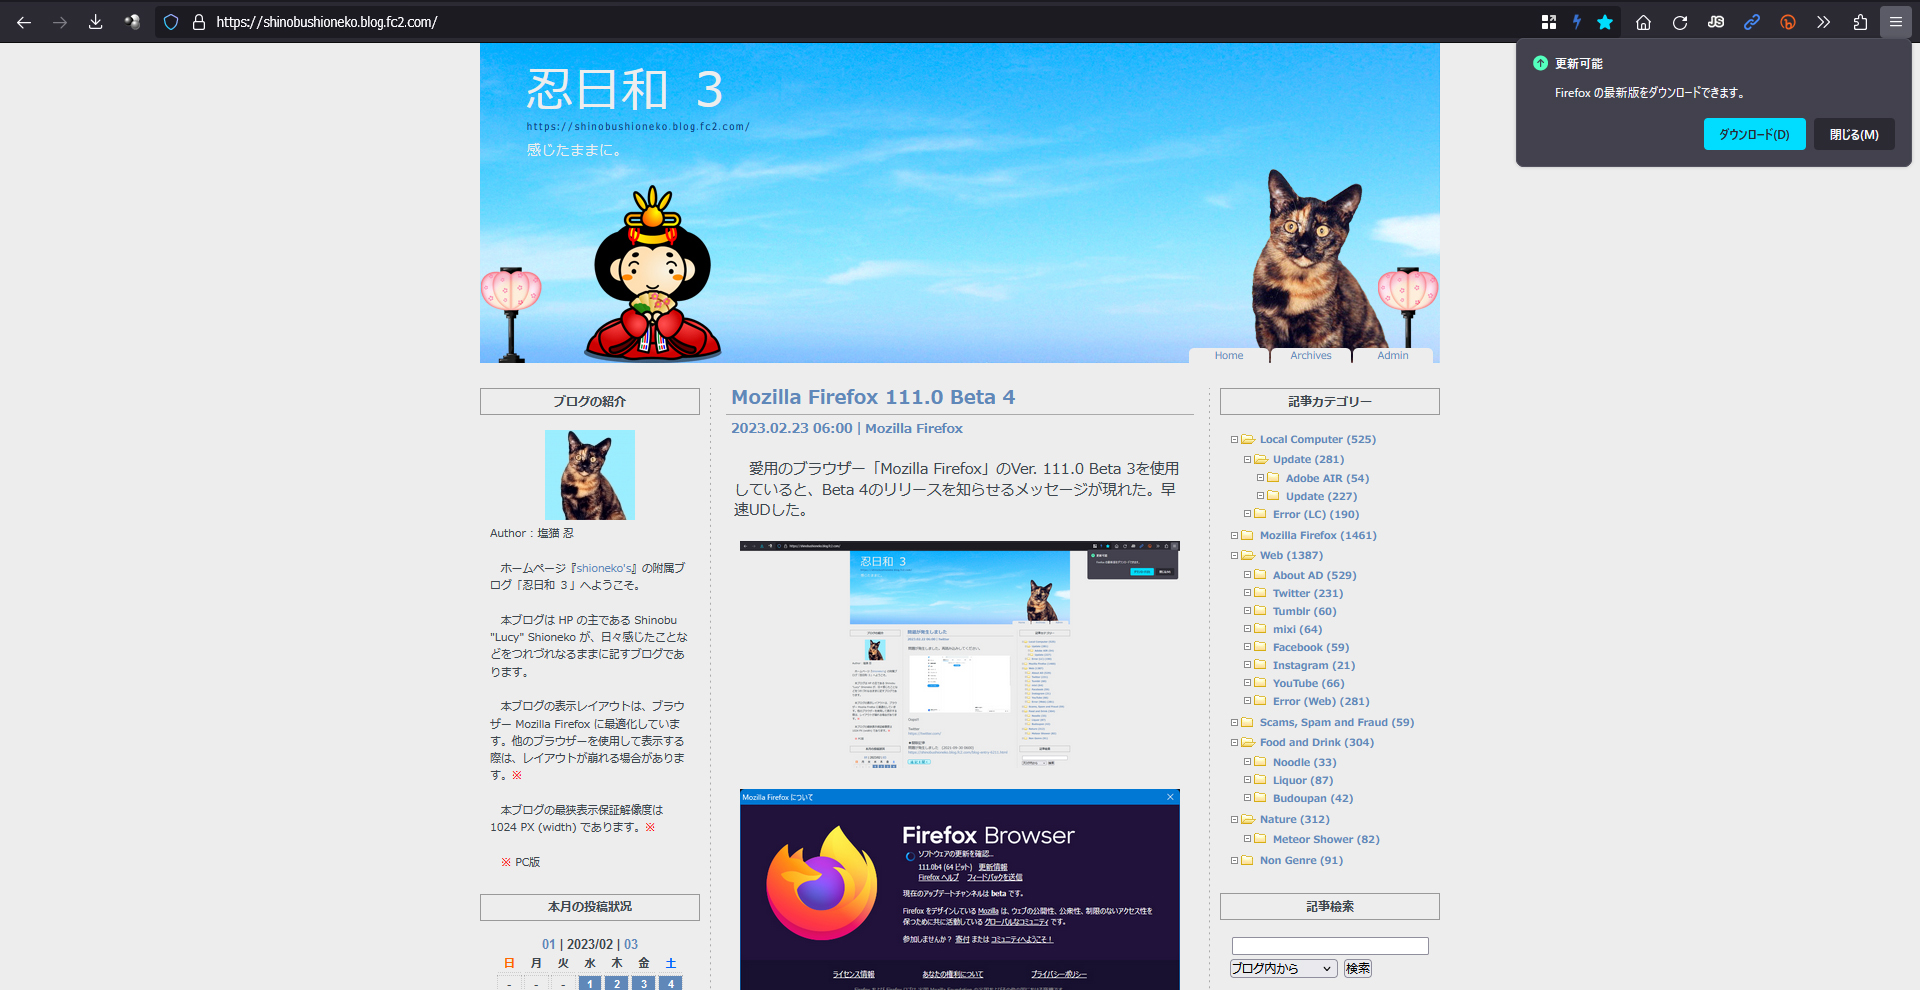 Mozilla Firefox 111.0 Beta 5